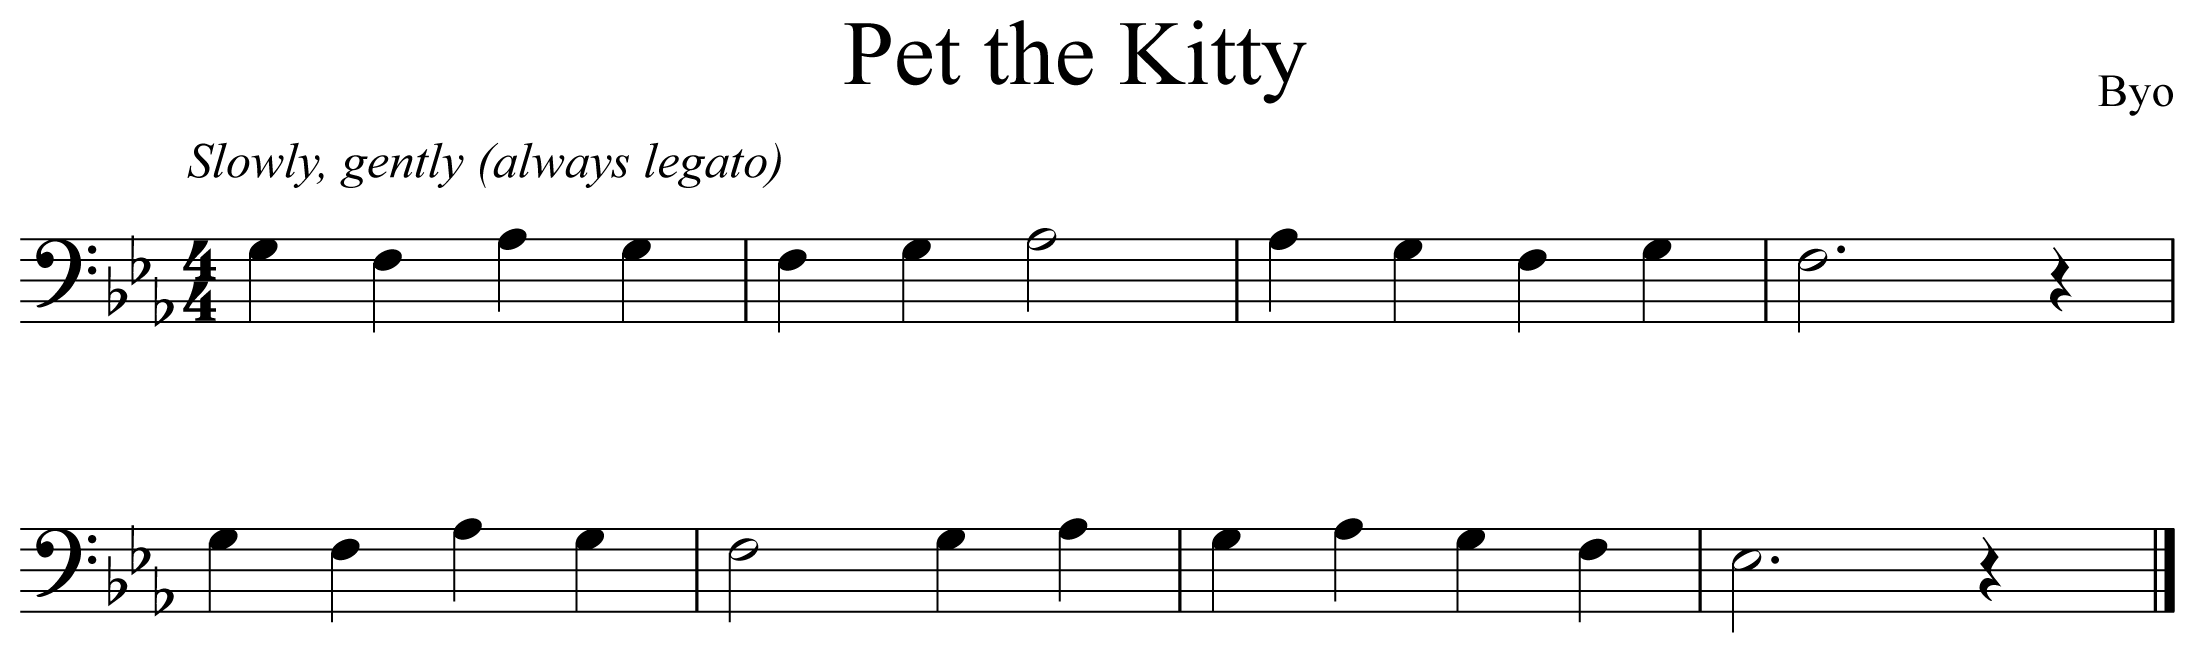 Pet the Kitty Music Notation Trombone